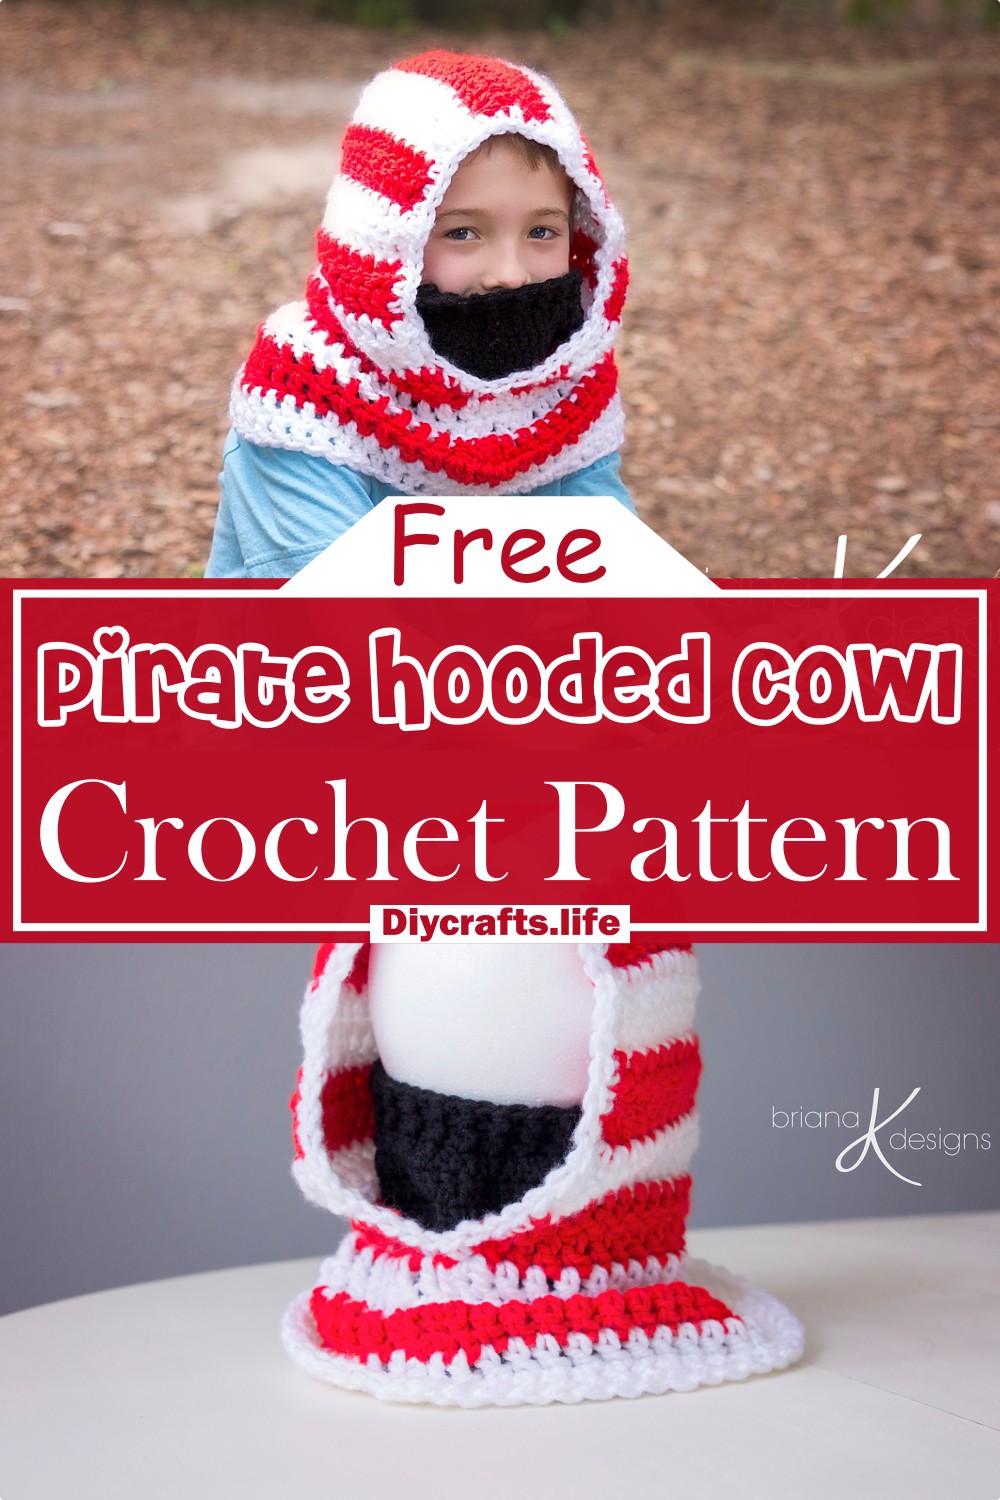 Crochet Pirate Hooded Cowl Pattern